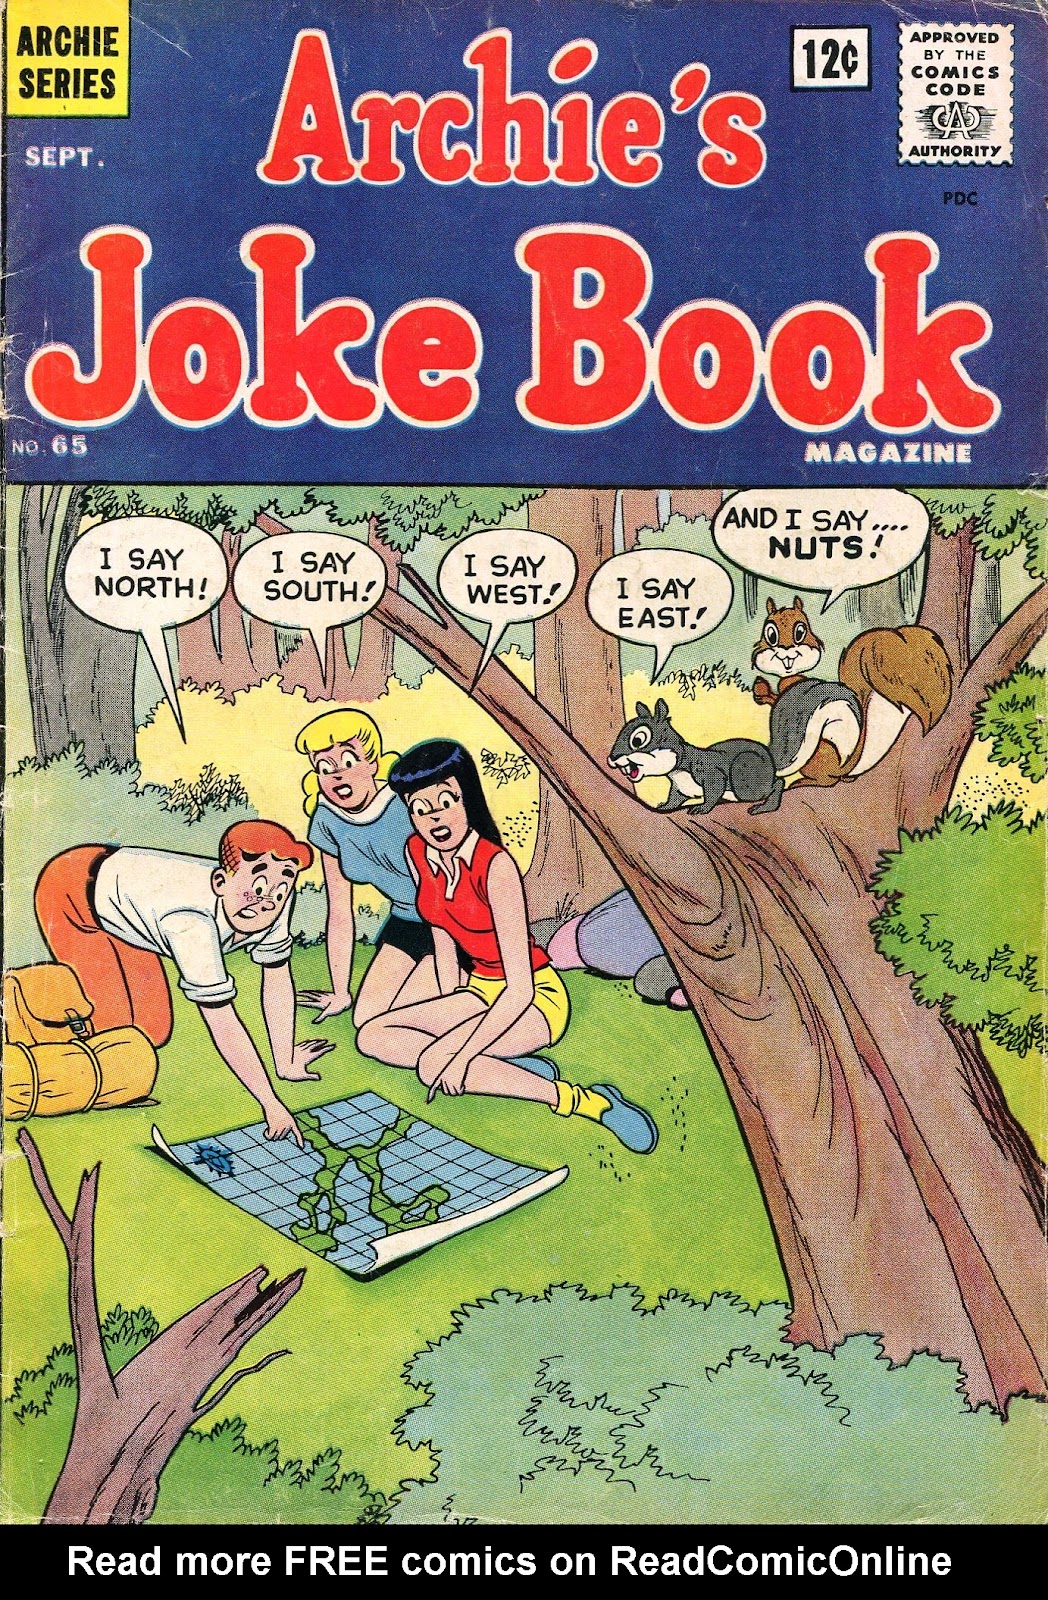 Archie's Joke Book Magazine issue 65 - Page 1